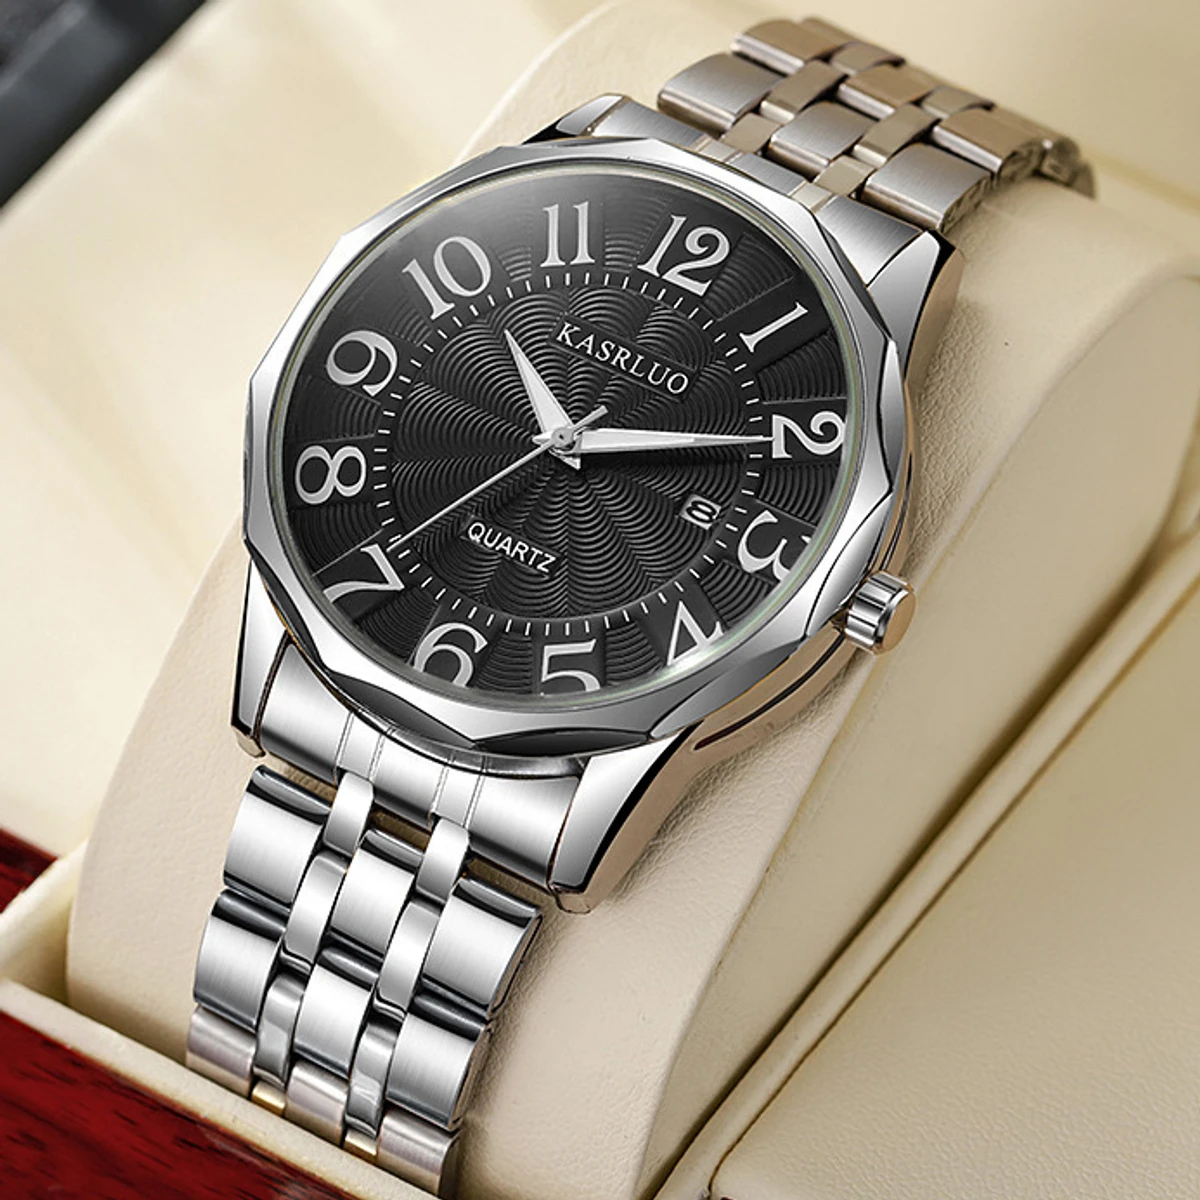 KASRLUO Popular New Fashion Quartz Watch for Men Stainless Steel Waterproof Luminous Date Mens Watches Top Brand Luxury Clock- Silver & Black